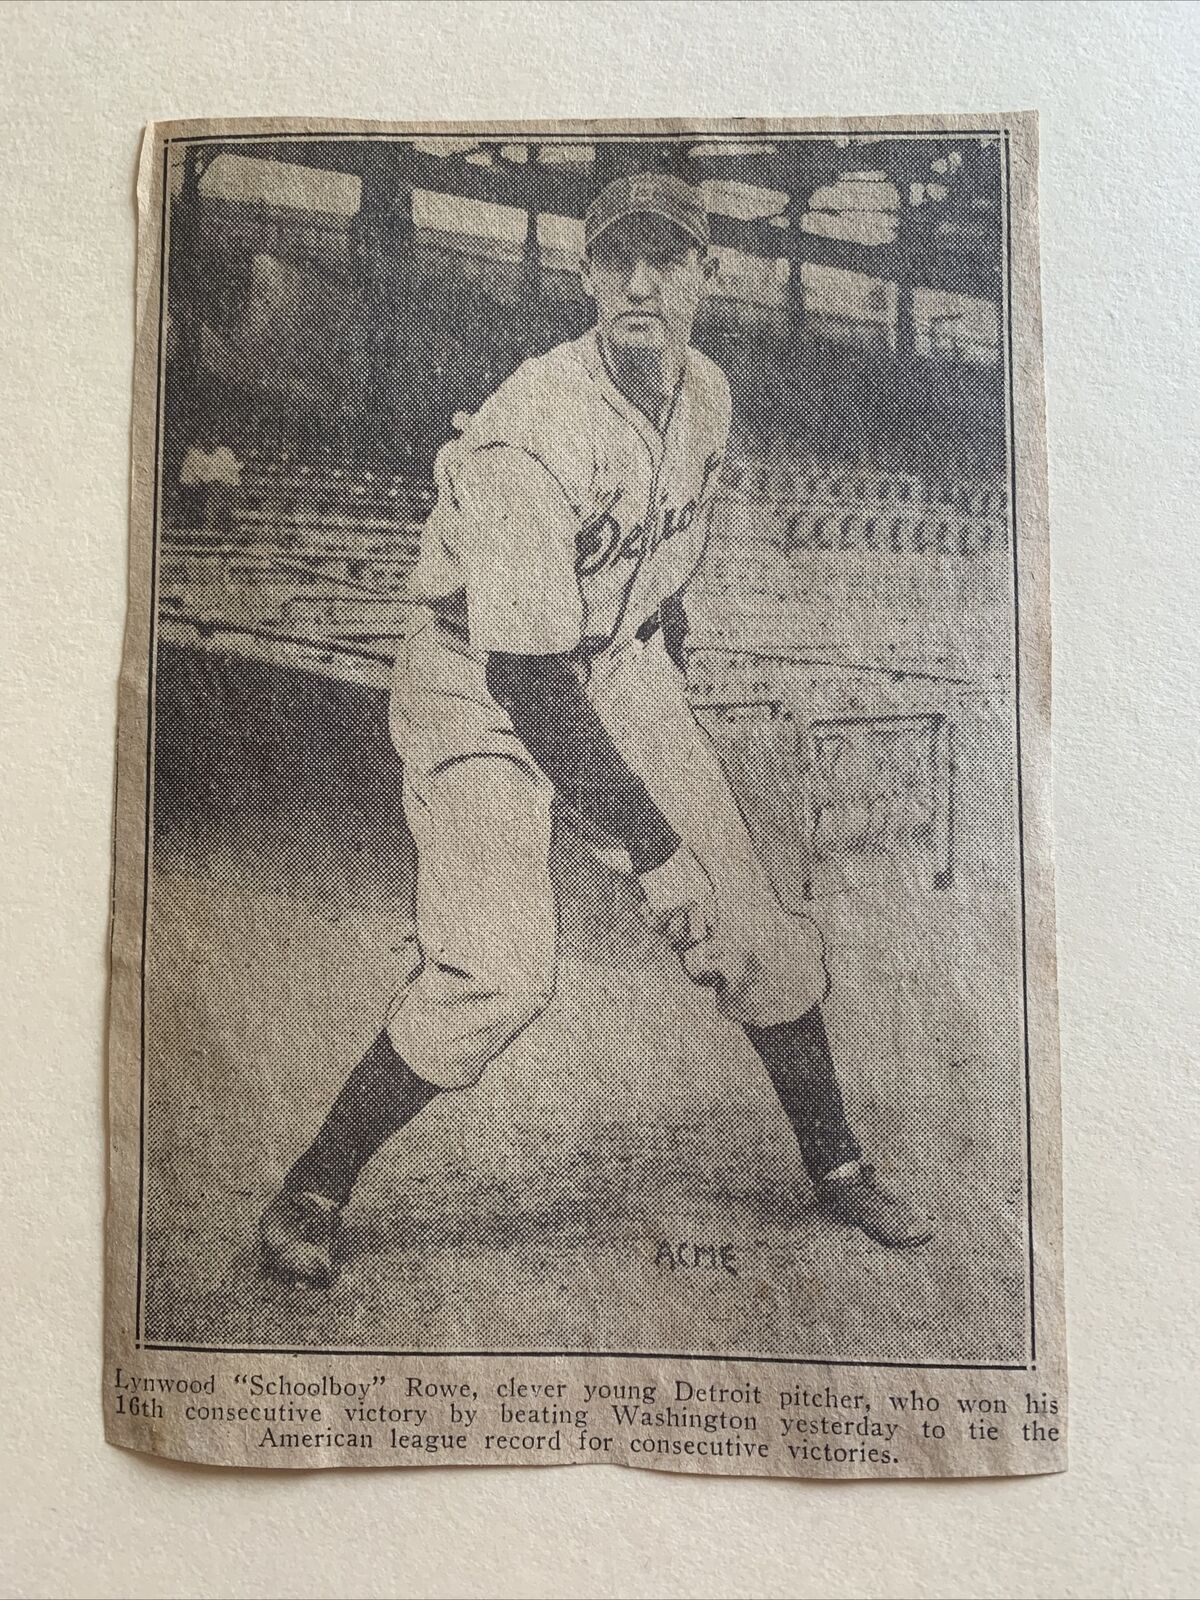 Schoolboy Rowe Detroit Tigers 16 Consecutive Victories 1934 Baseball 4X6 Panel